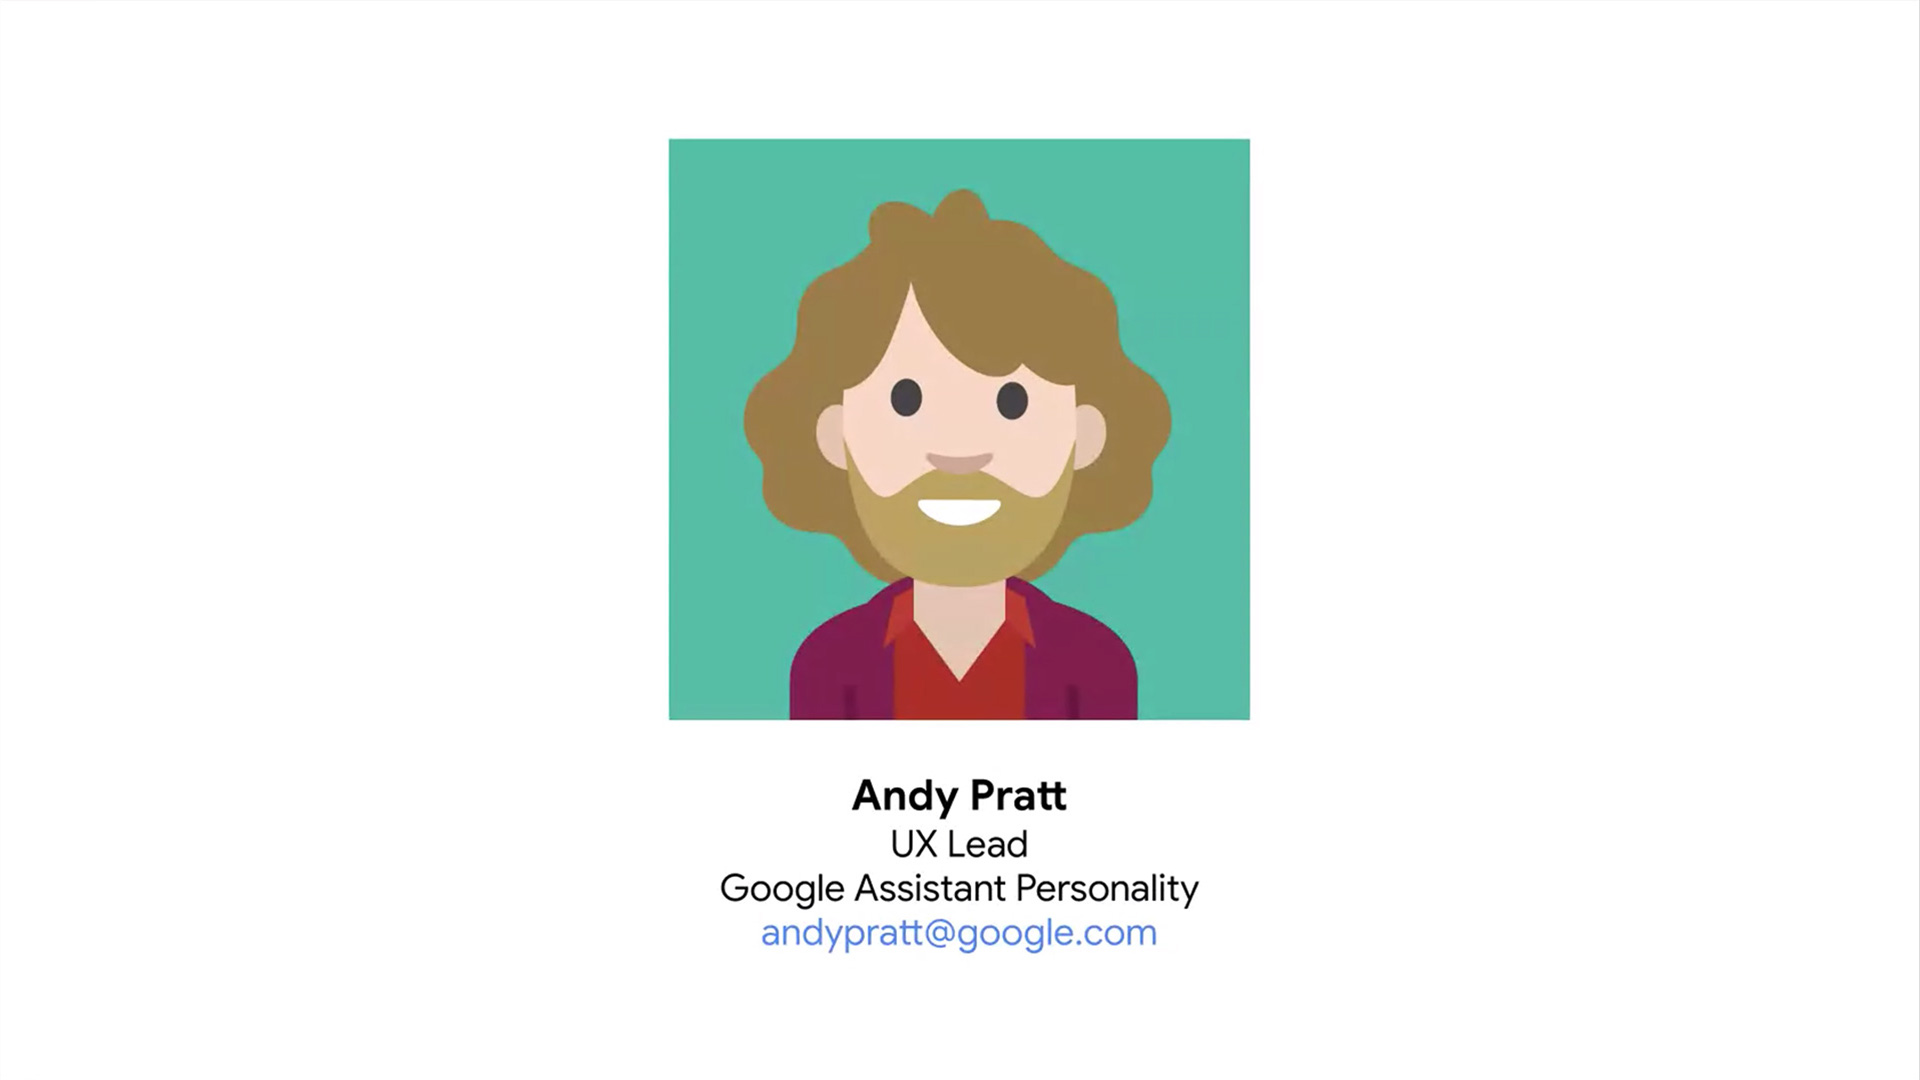 friendly graphic illustration and short bio of Andy Pratt